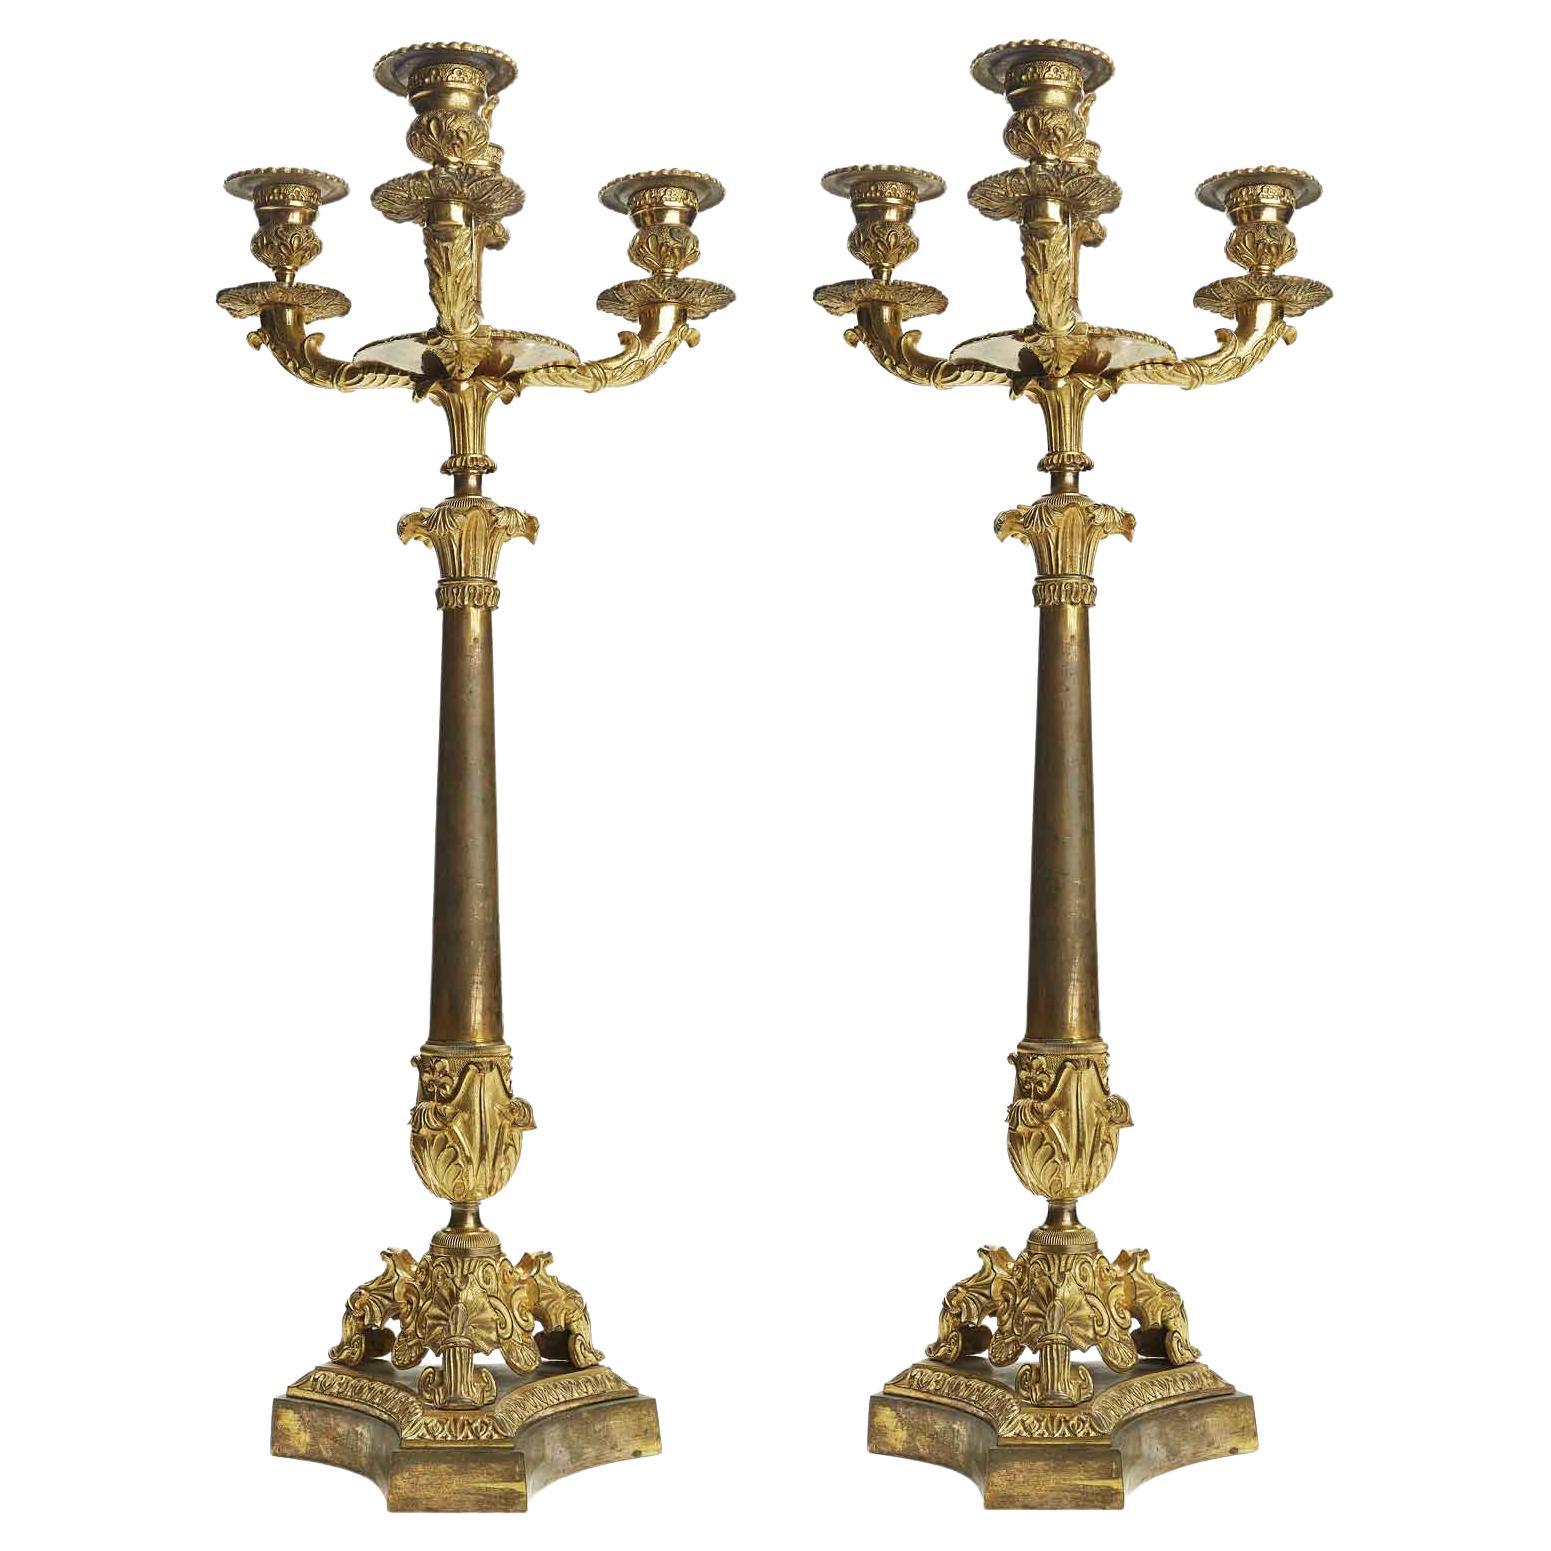 Pair of 19th Century Empire Candelabra Italian Gilt Bronze Three-Arm Flambeaux